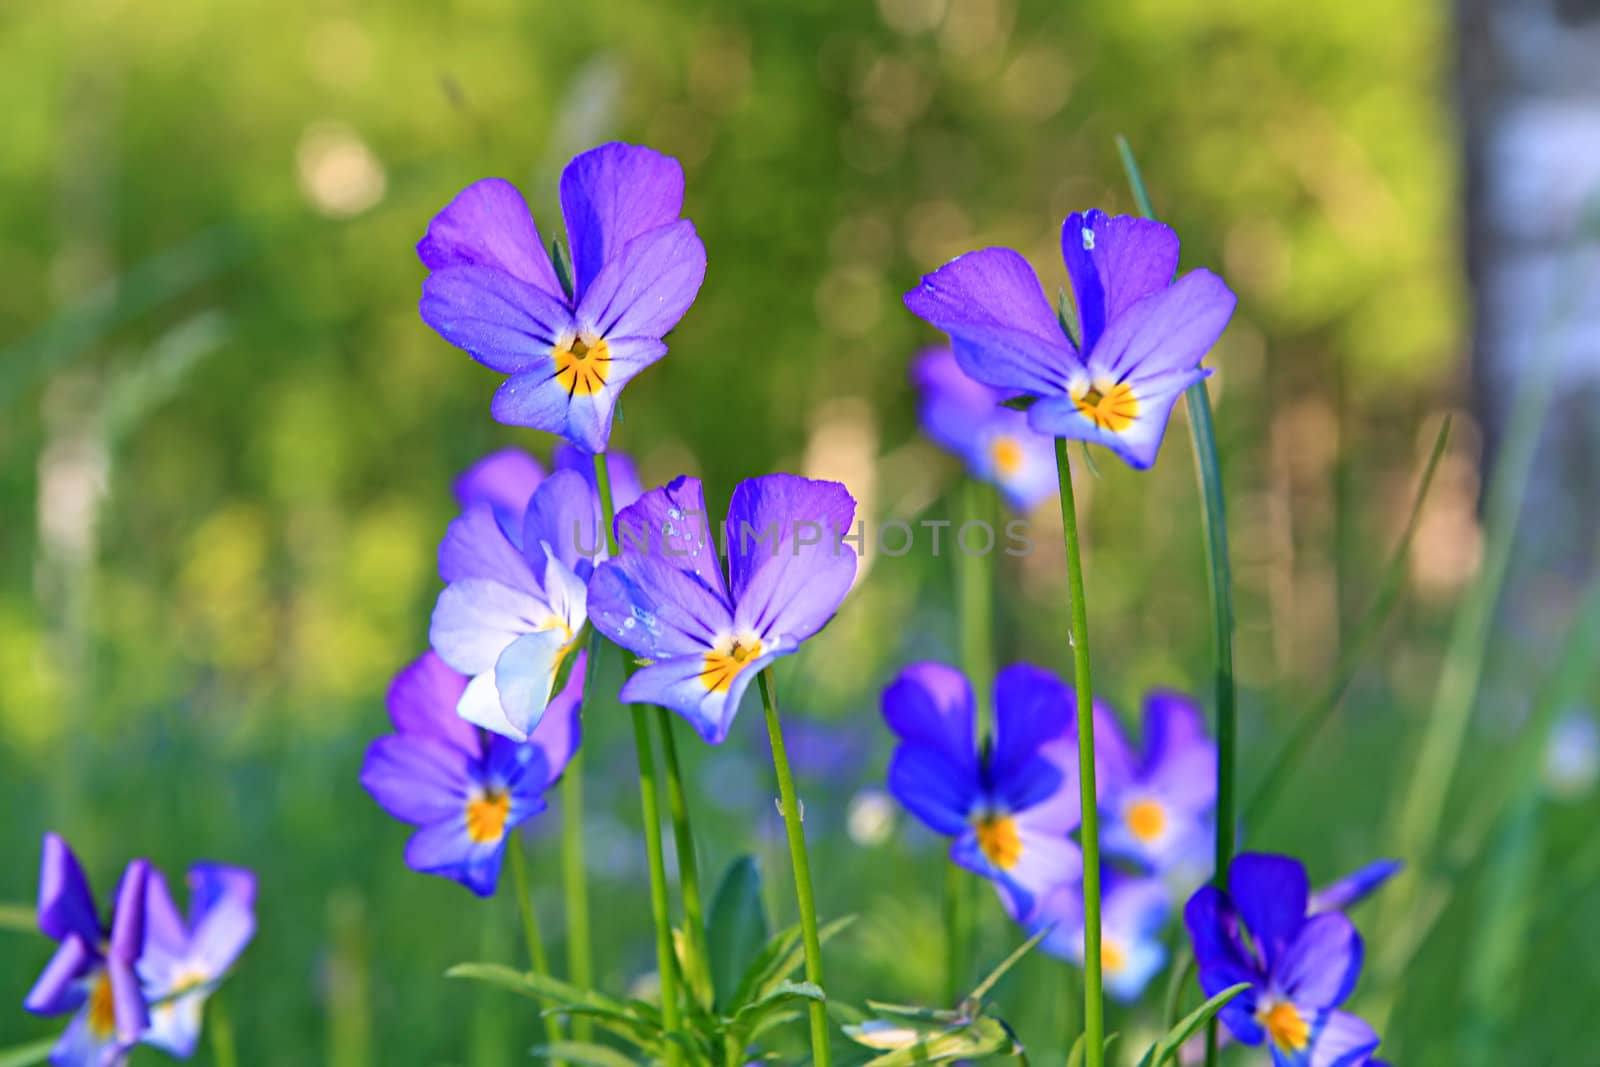 violets on field by basel101658